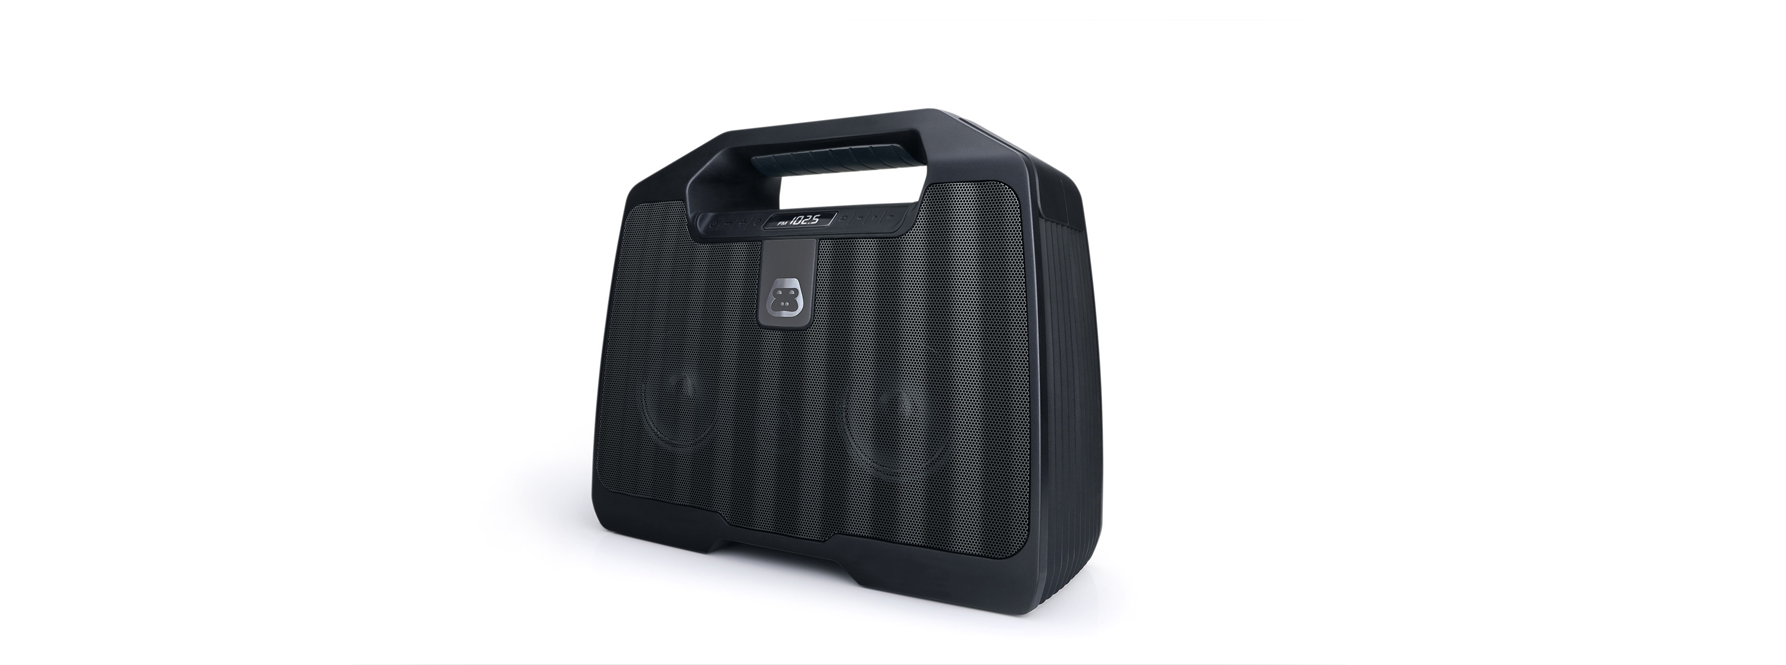 Bluetooth Wireless Boombox with FM Radio